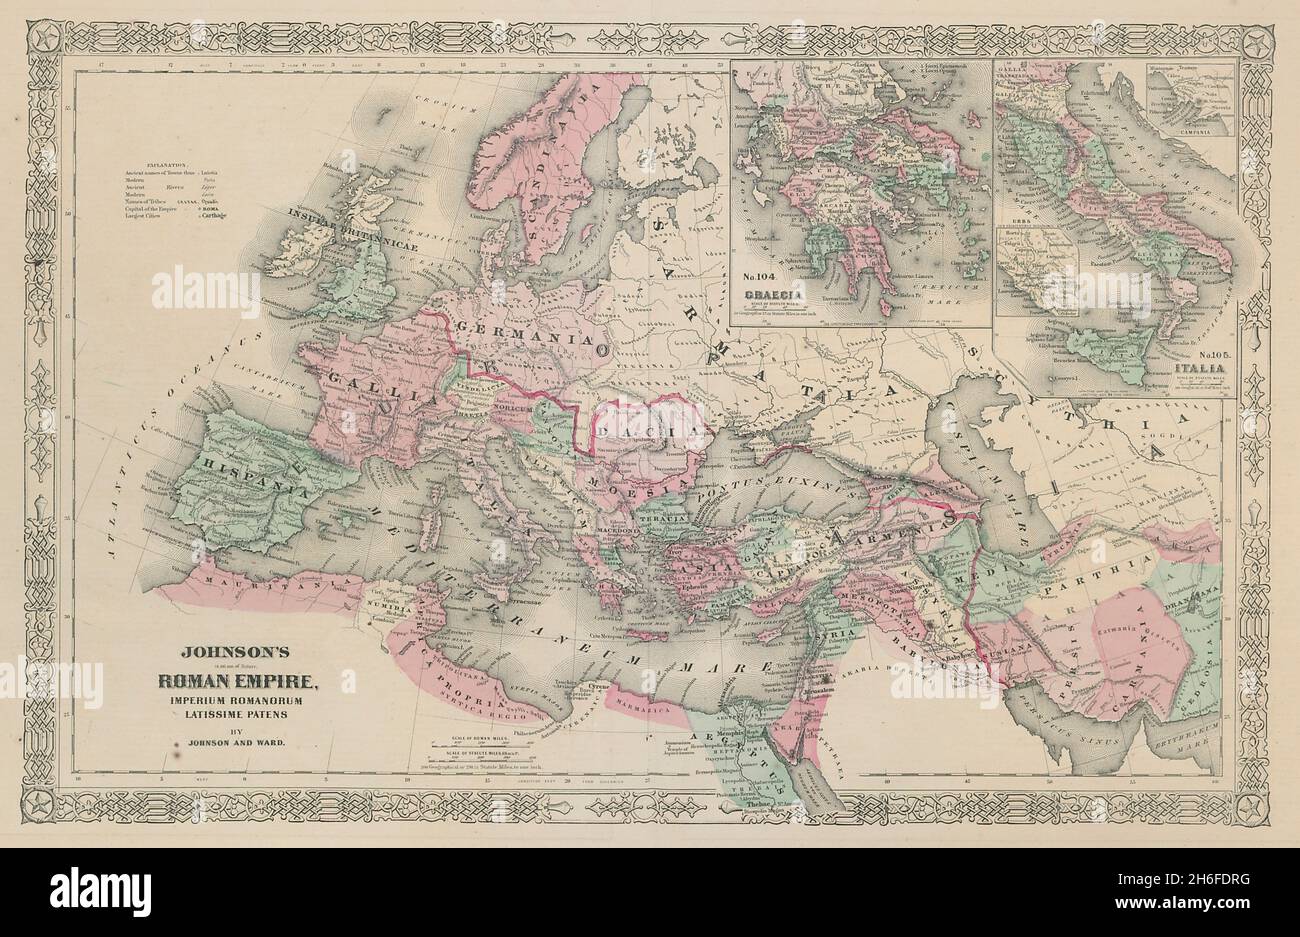 Johnson's Roman Empire. Imperium Romanorum. Graecia Italia Greece Italy 1865 map Stock Photo